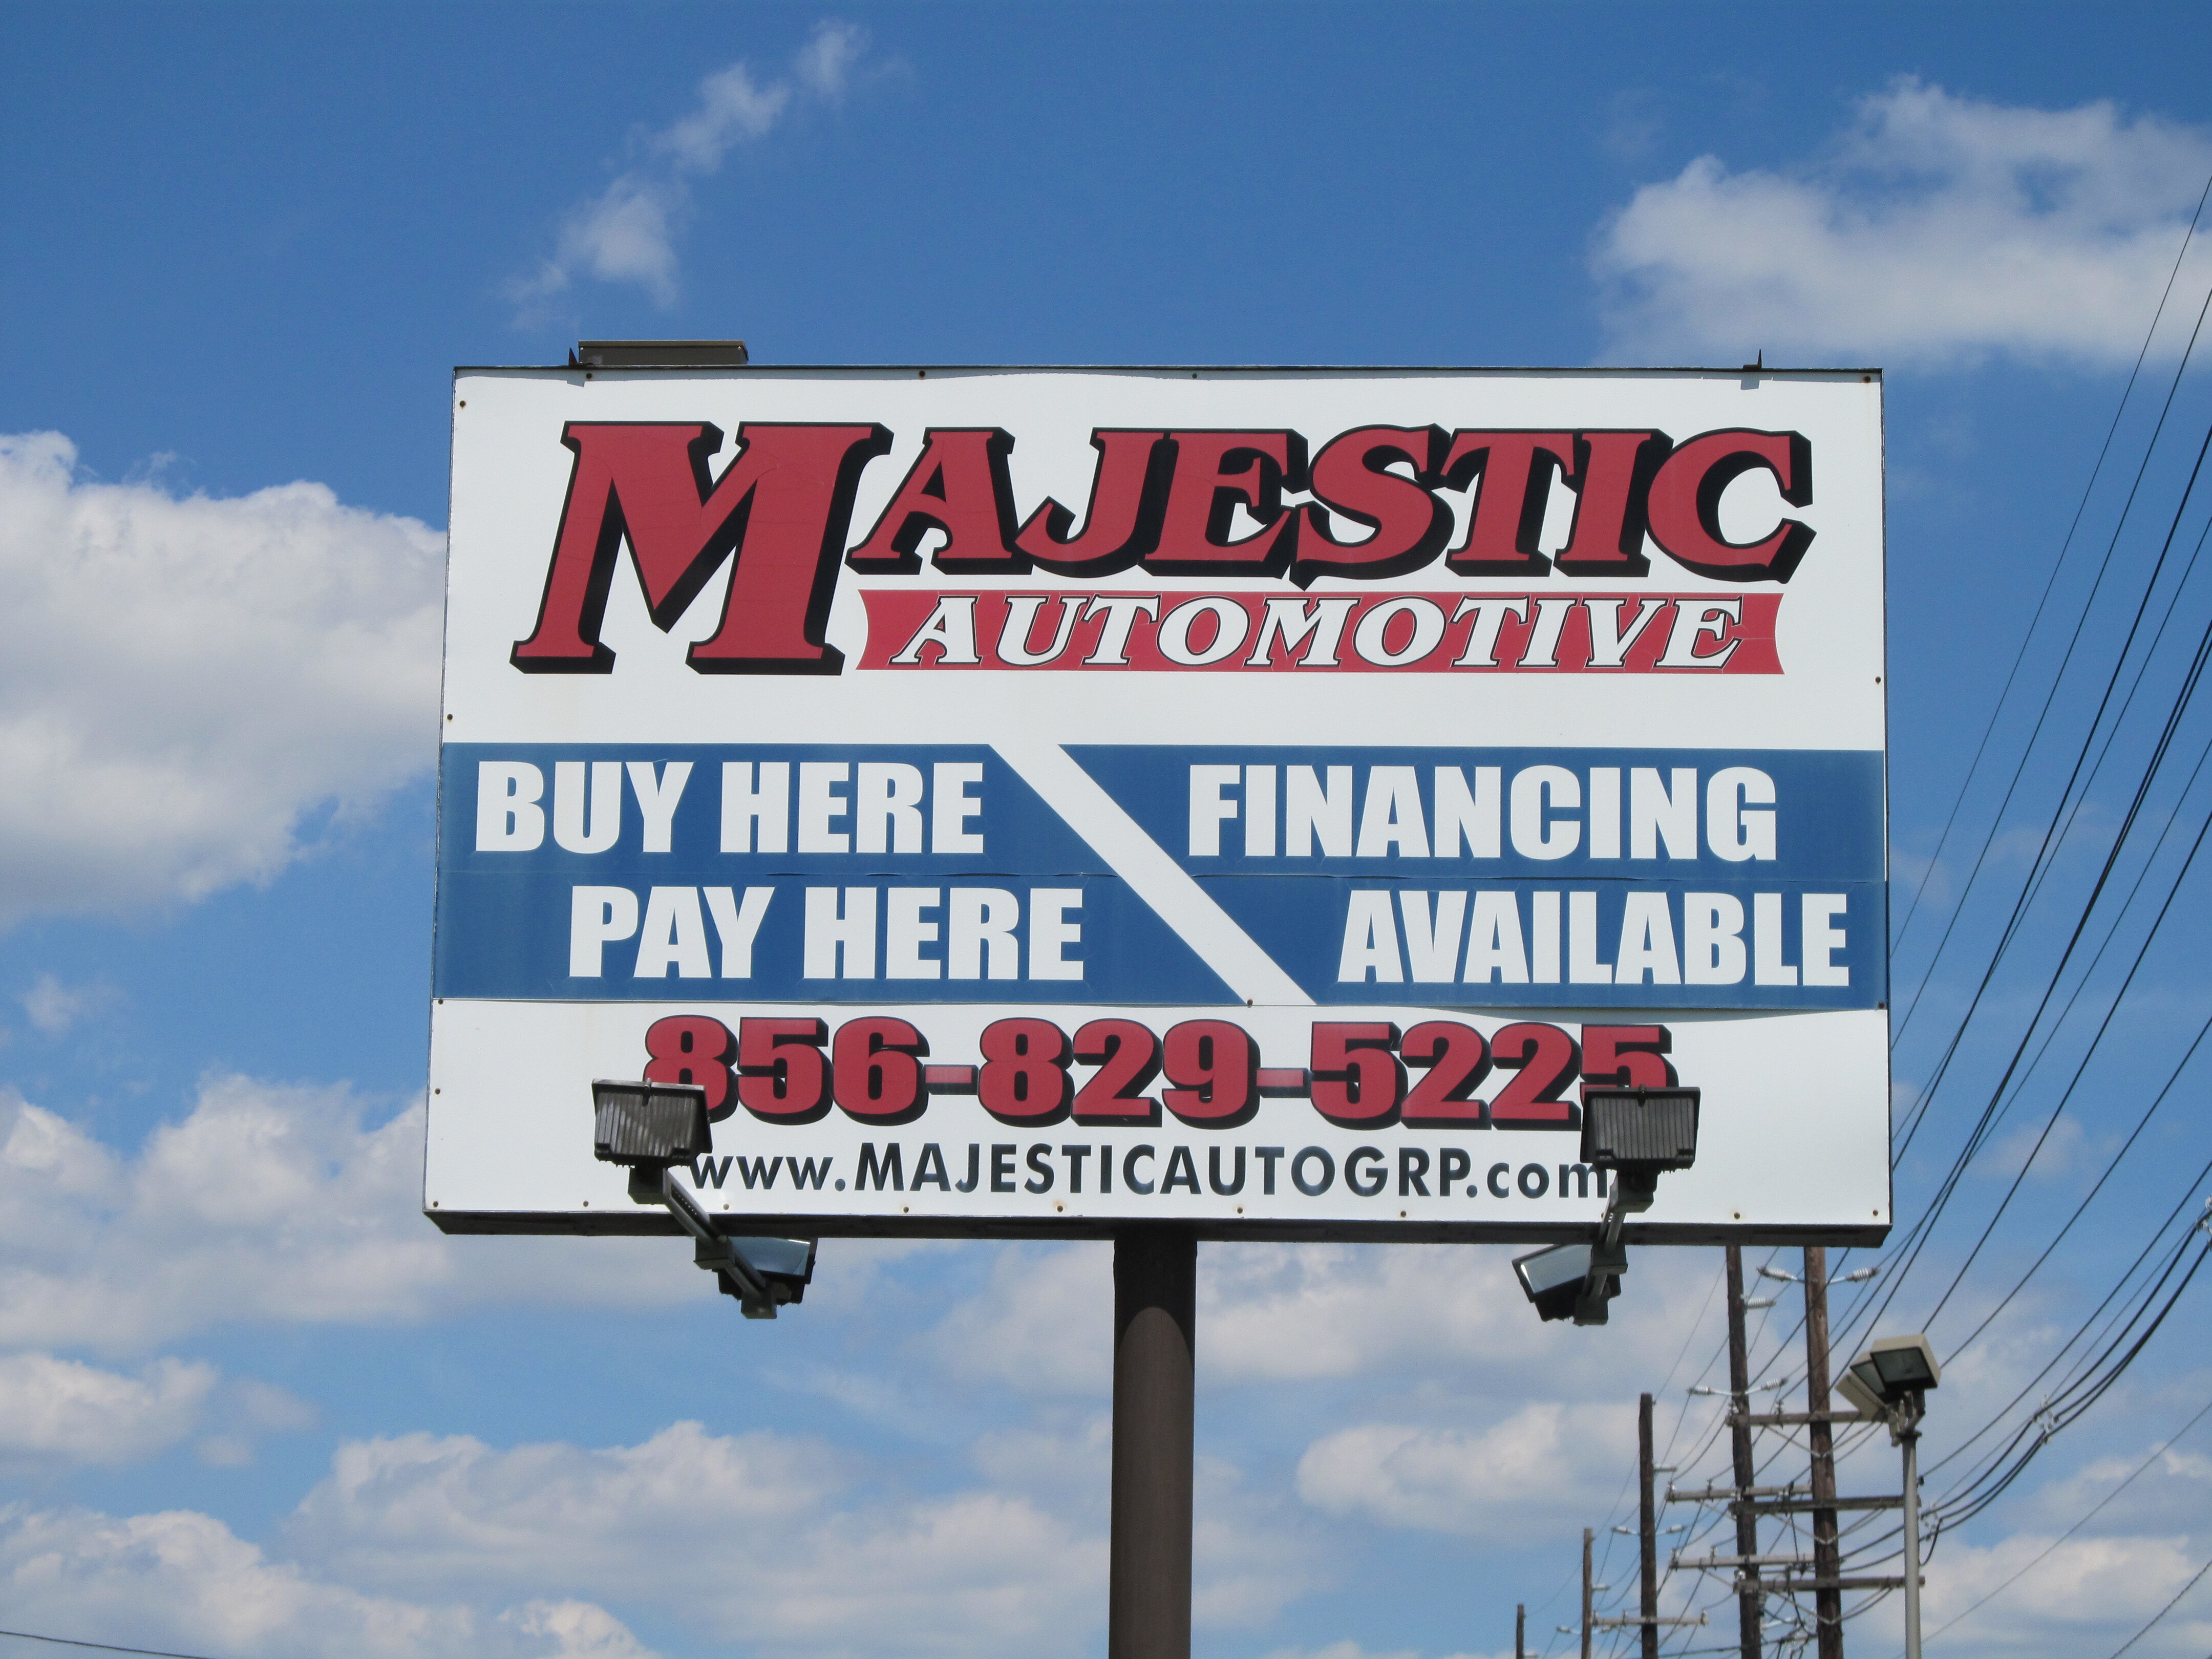 Majestic Automotive Group in Cinnaminson, NJ 08077